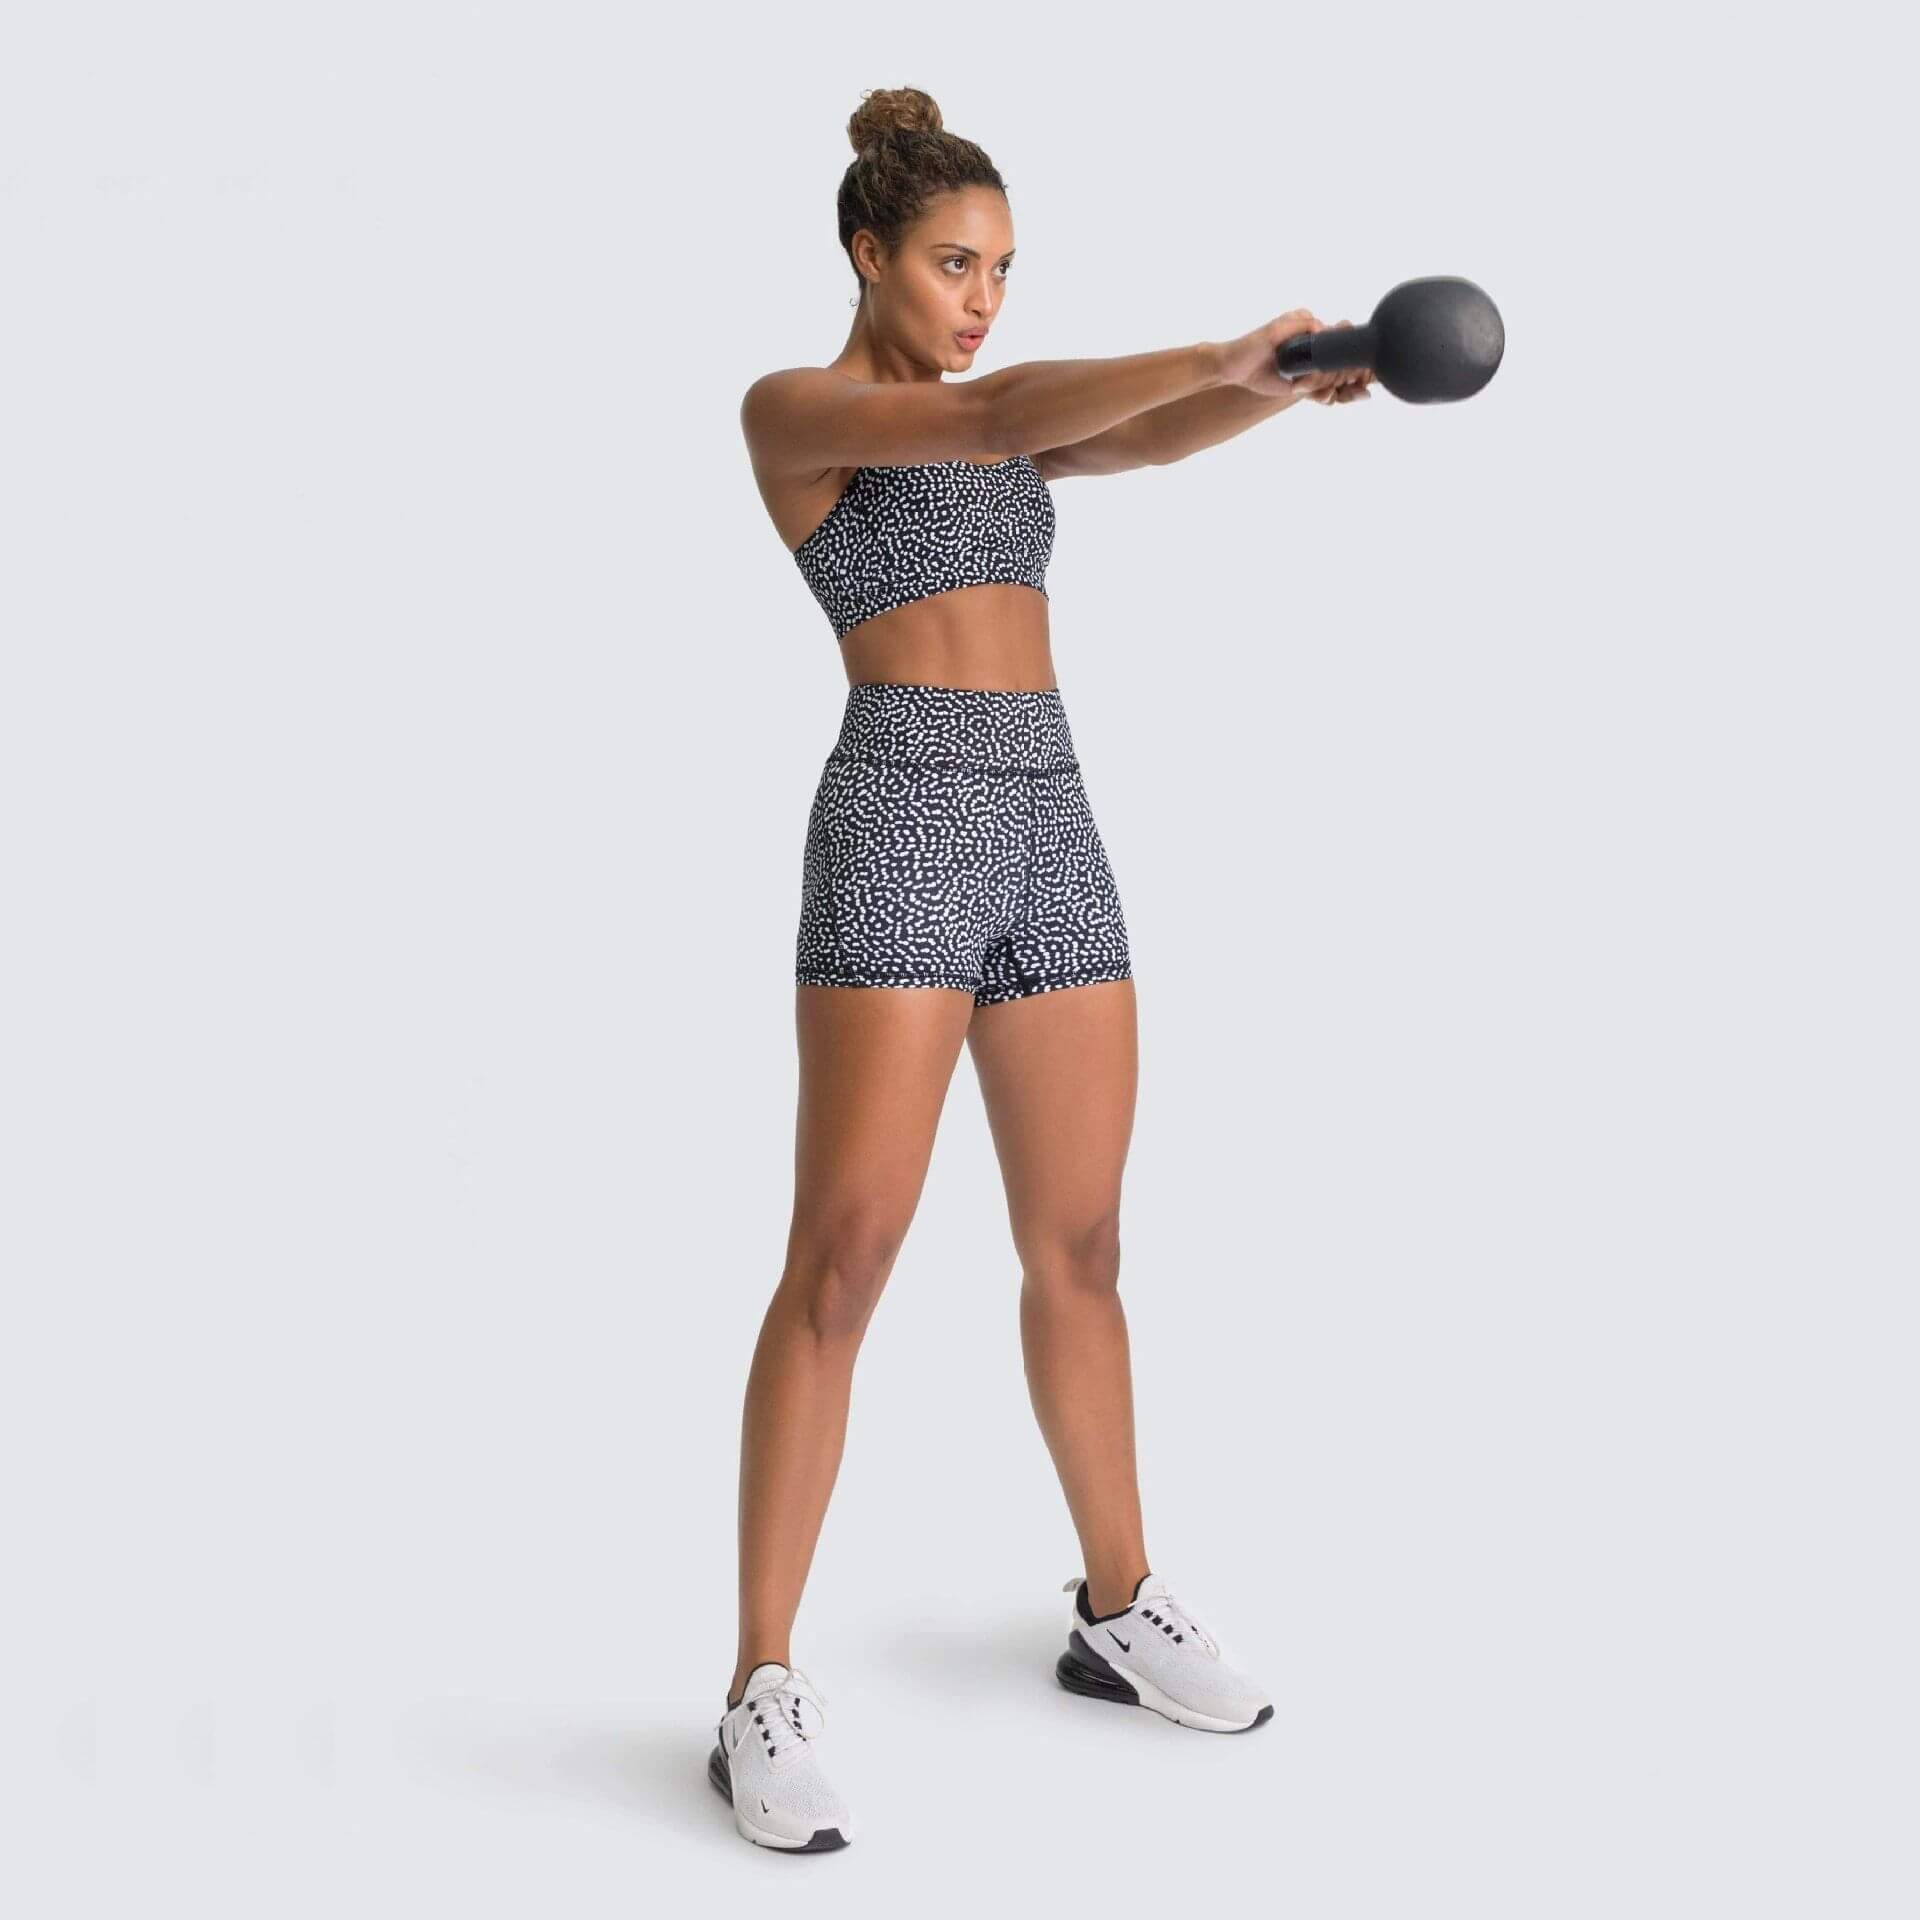 Speckle Gym Set - Shorts + Top Yoga Sets Truetights 